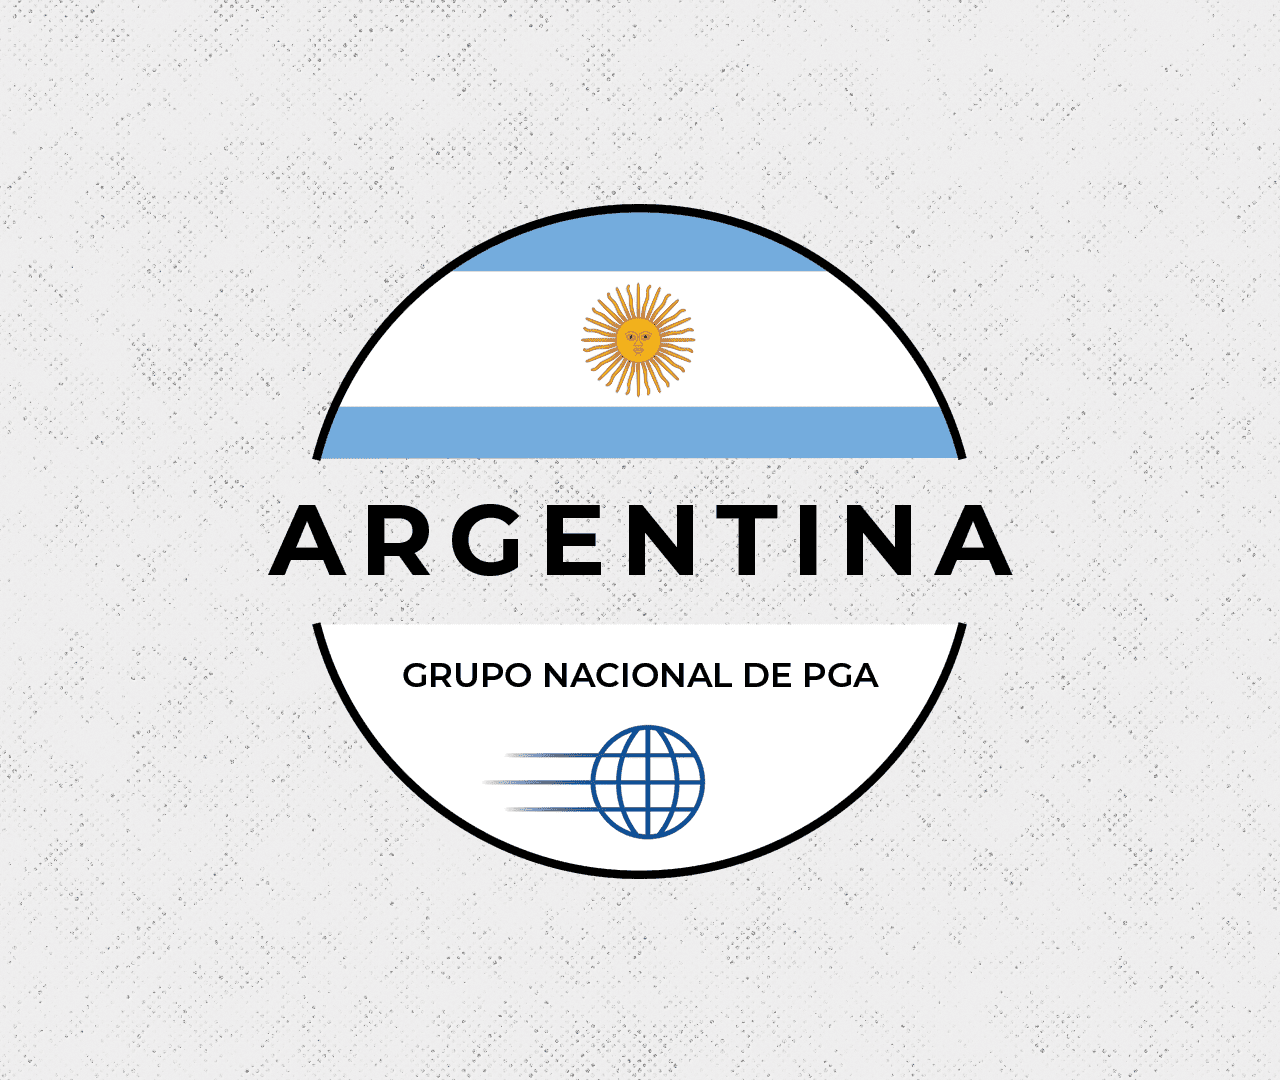 Argentina Grupo Nacional de PGA